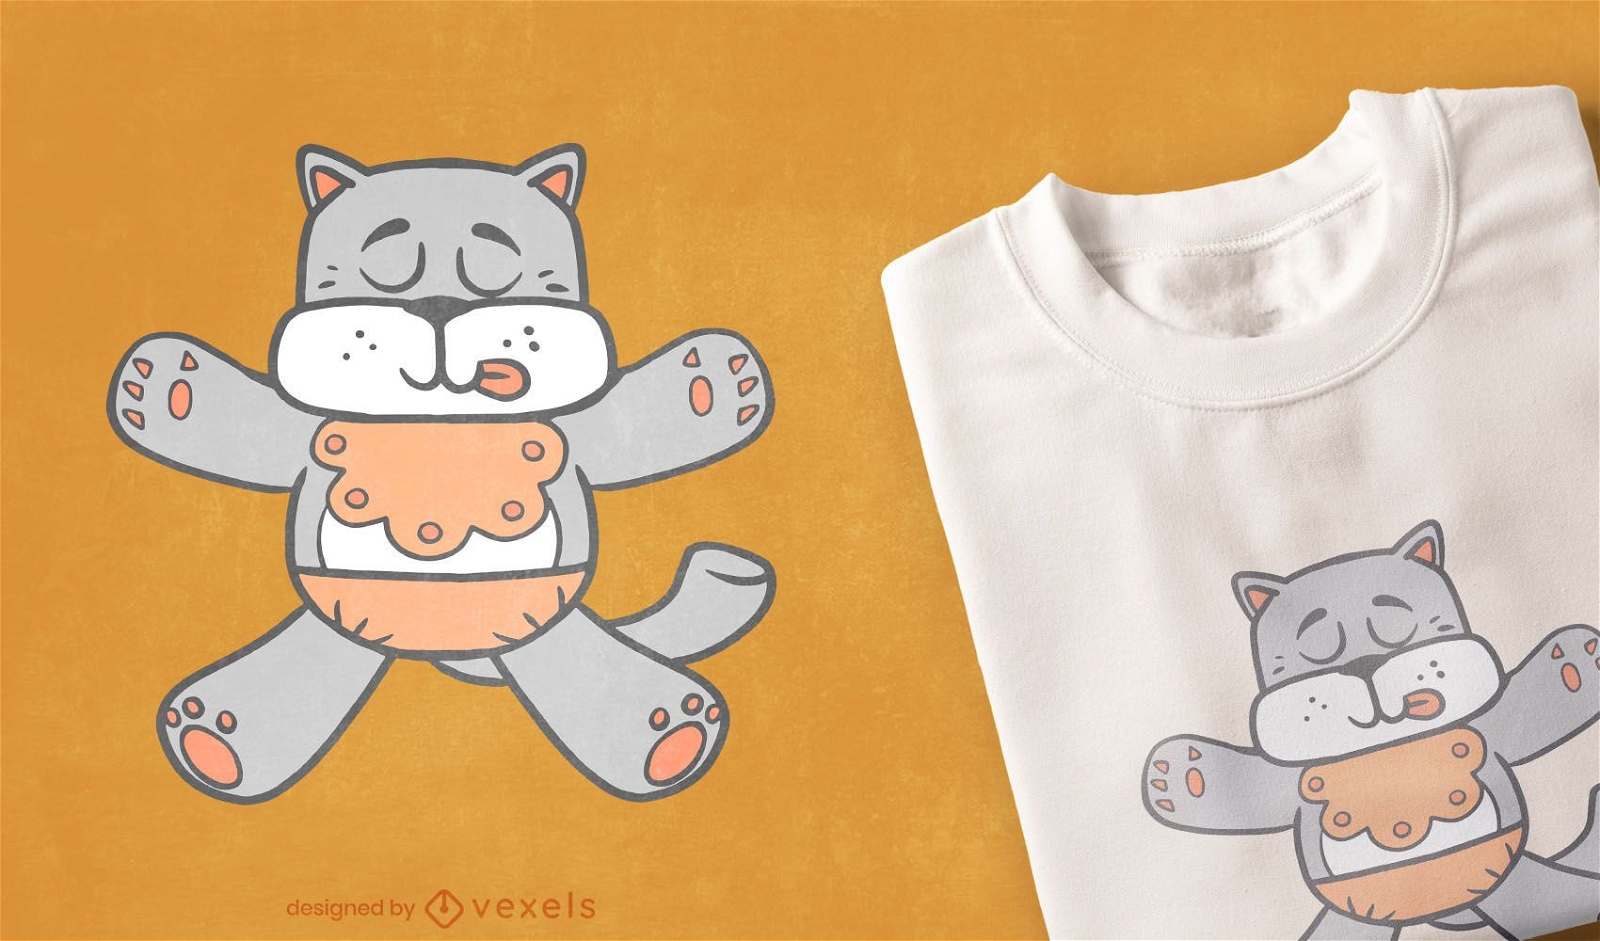 Dog baby t-shirt design